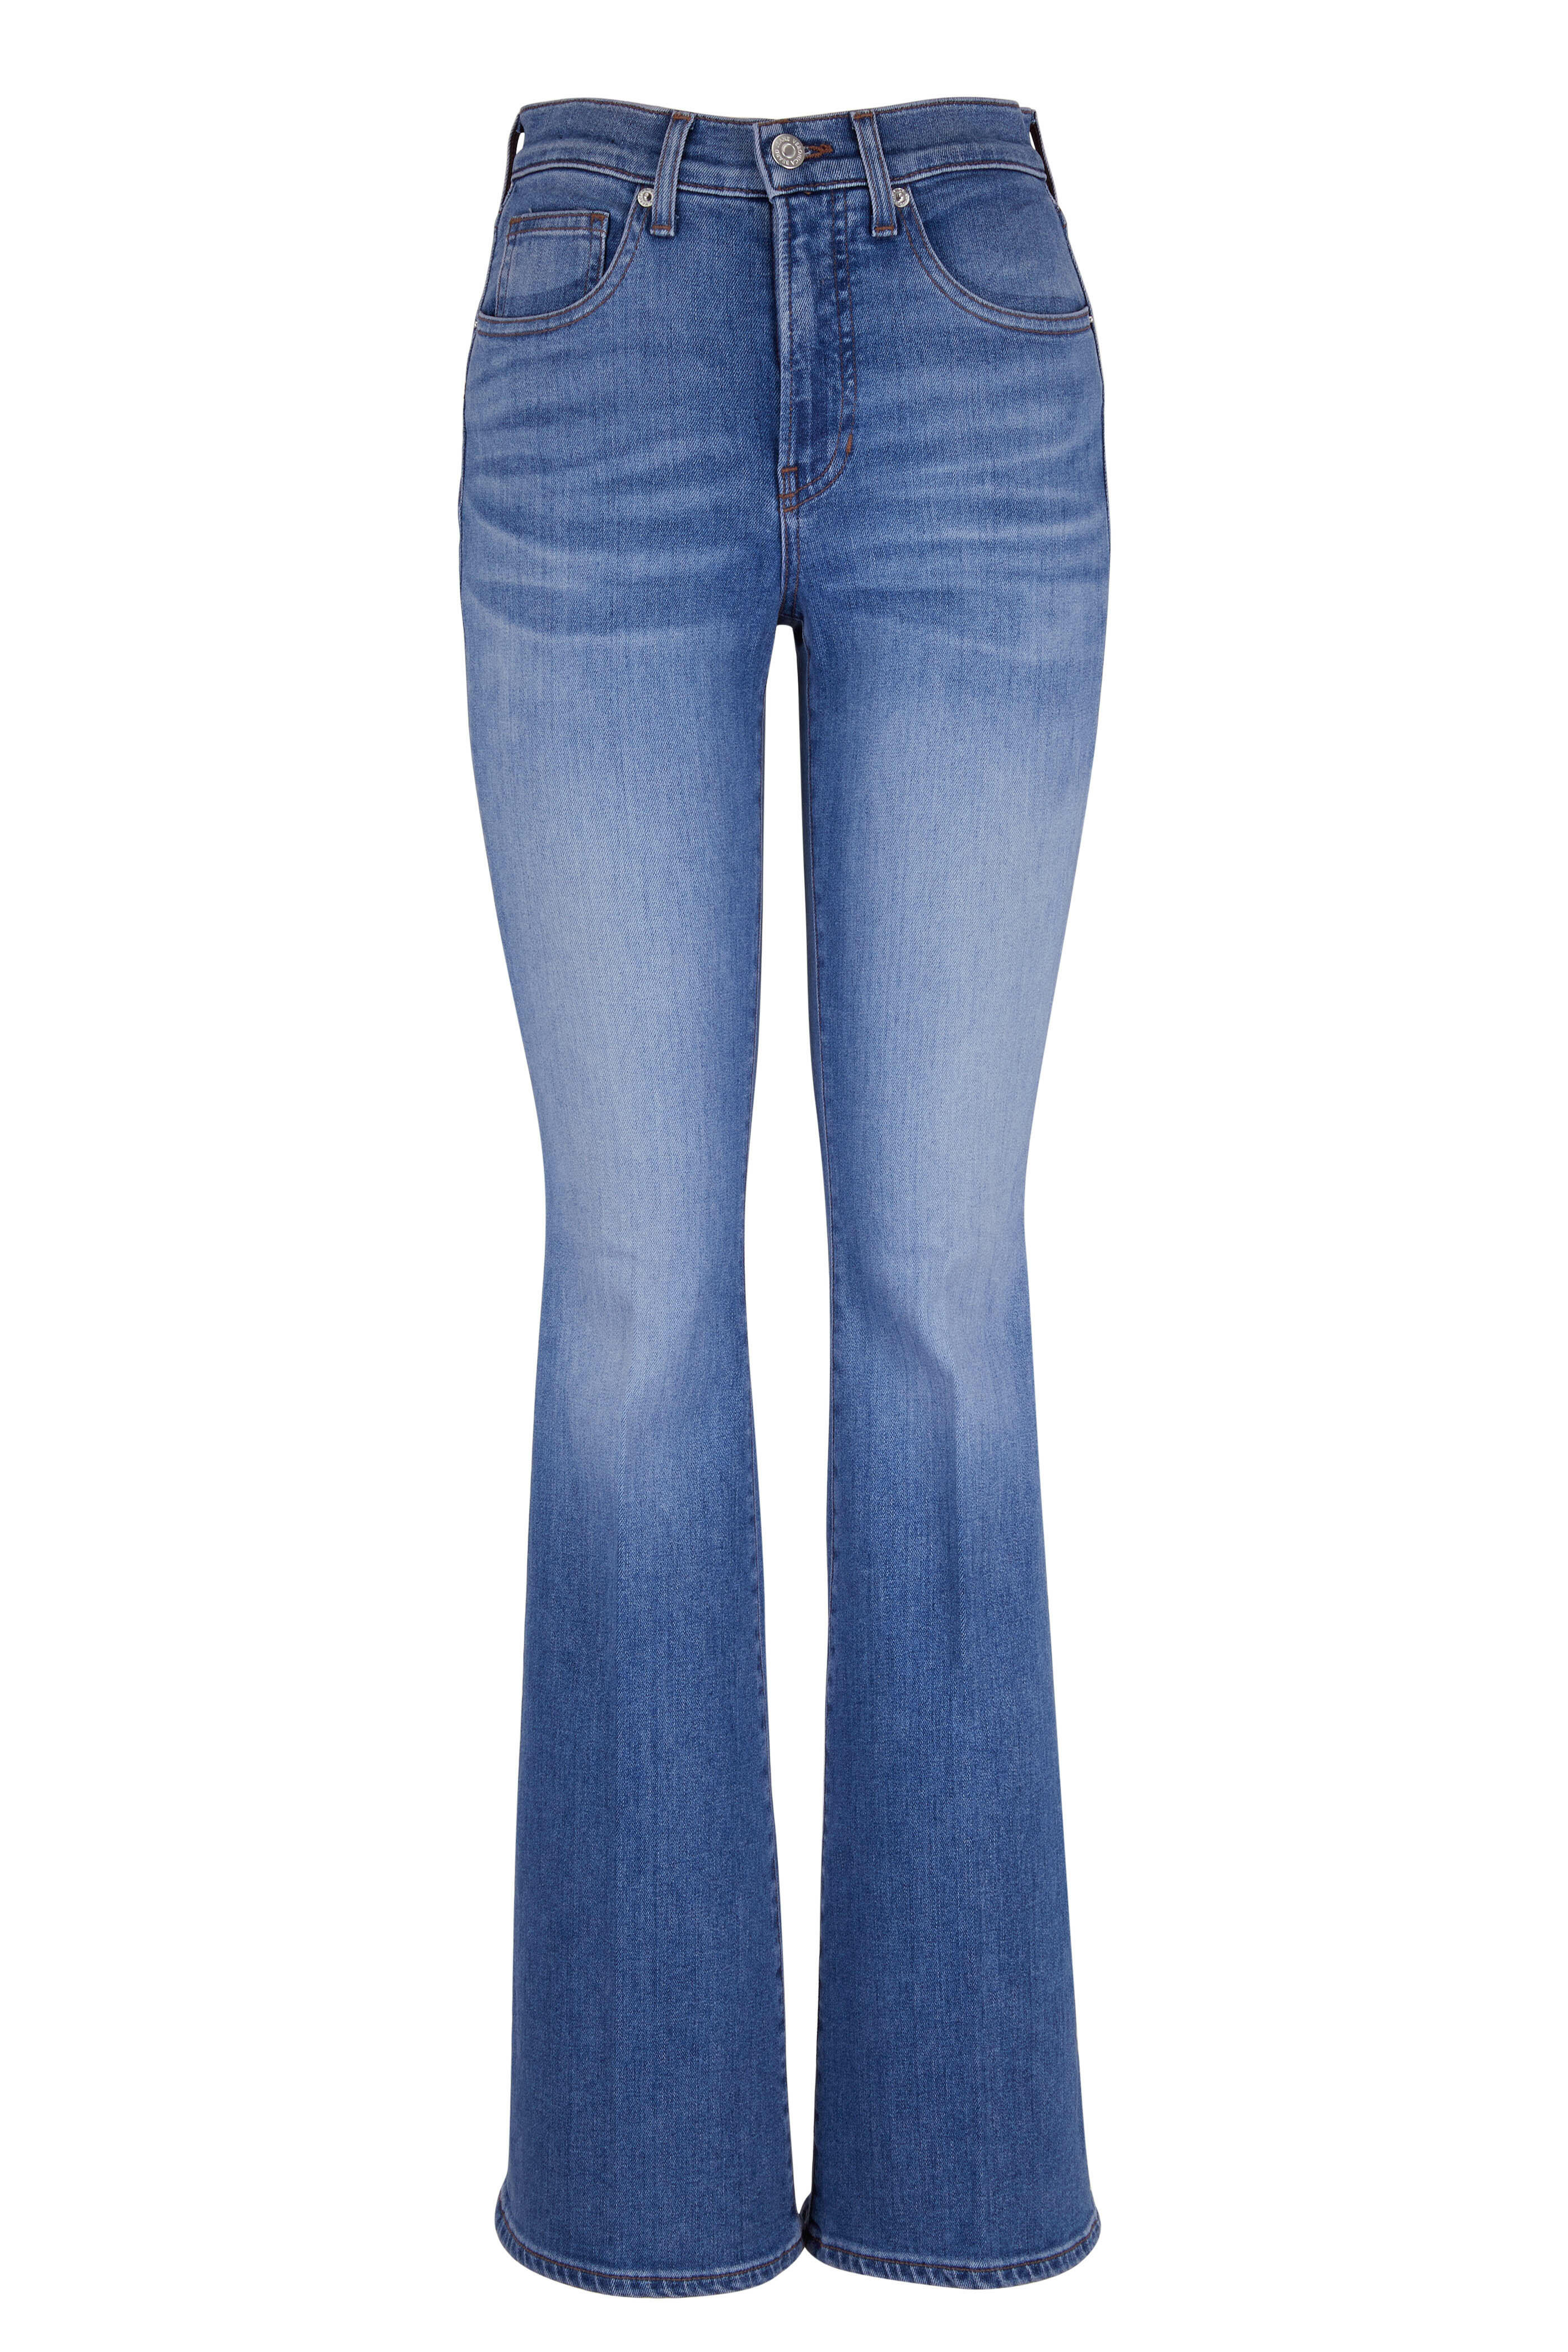 Veronica Beard - Beverly Sedna High-Rise Skinny Flare Jean